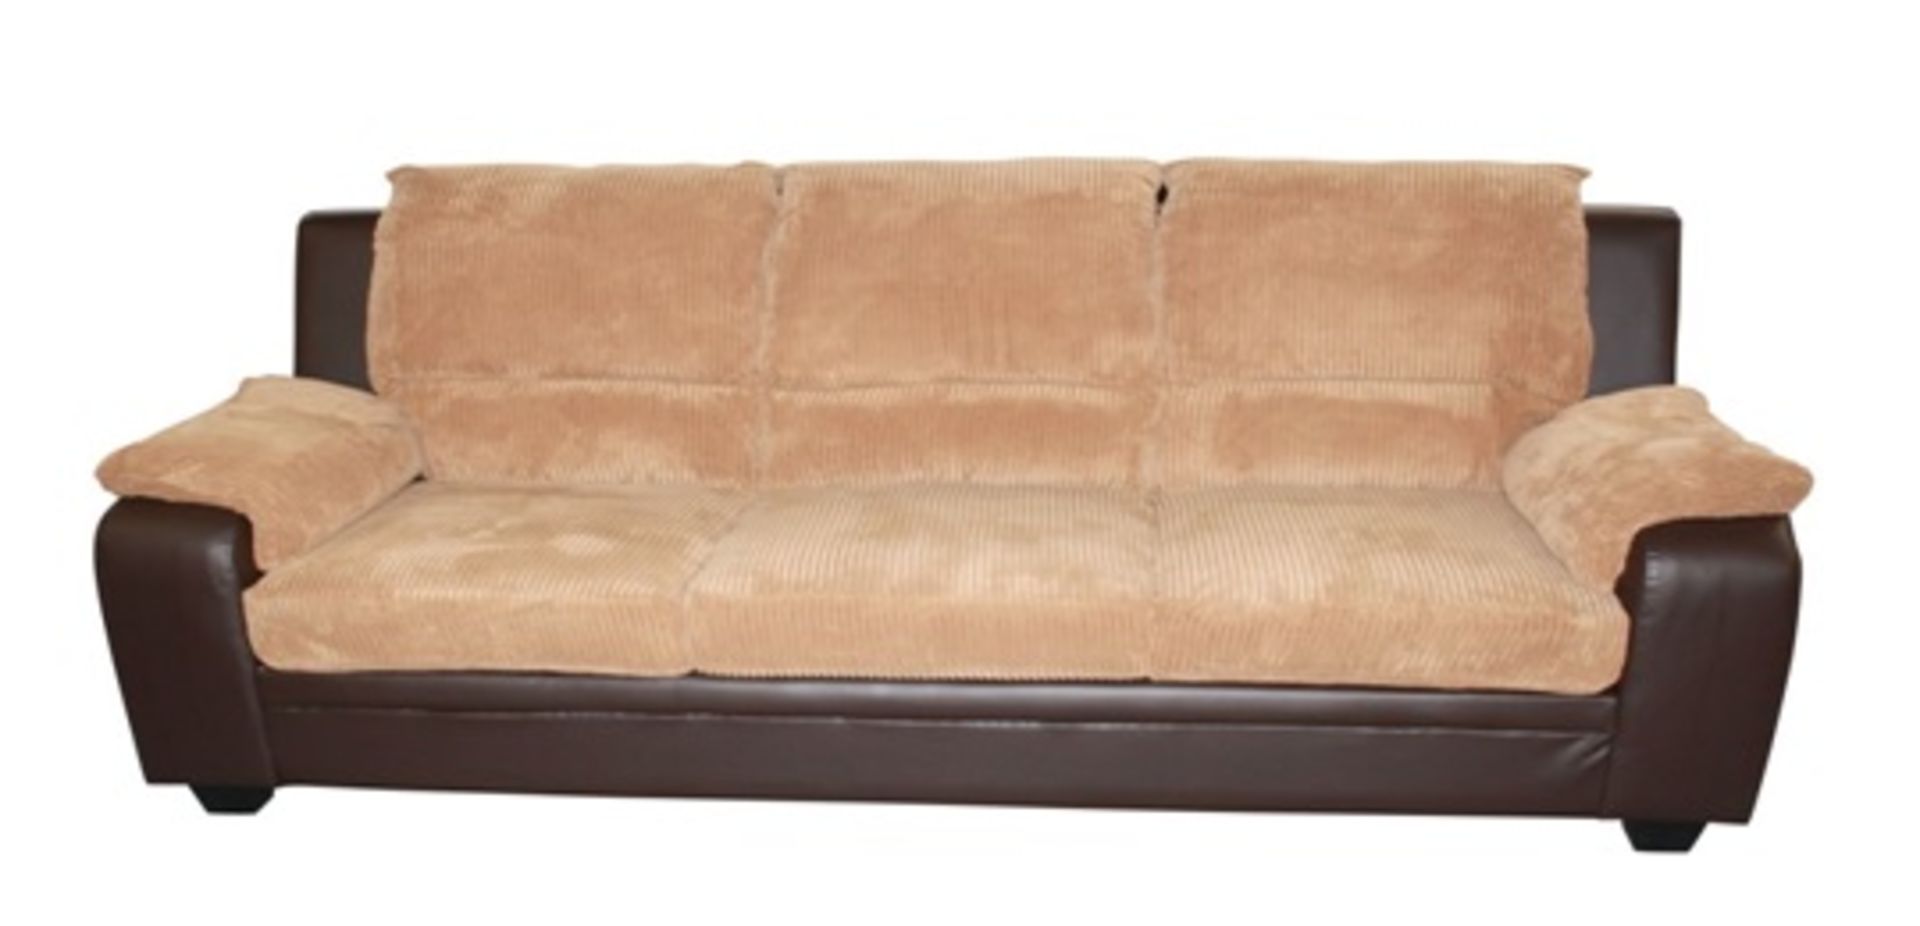 Brown/Tan Faux Leather/Fabric Sofa - Three Seater (Brand New)